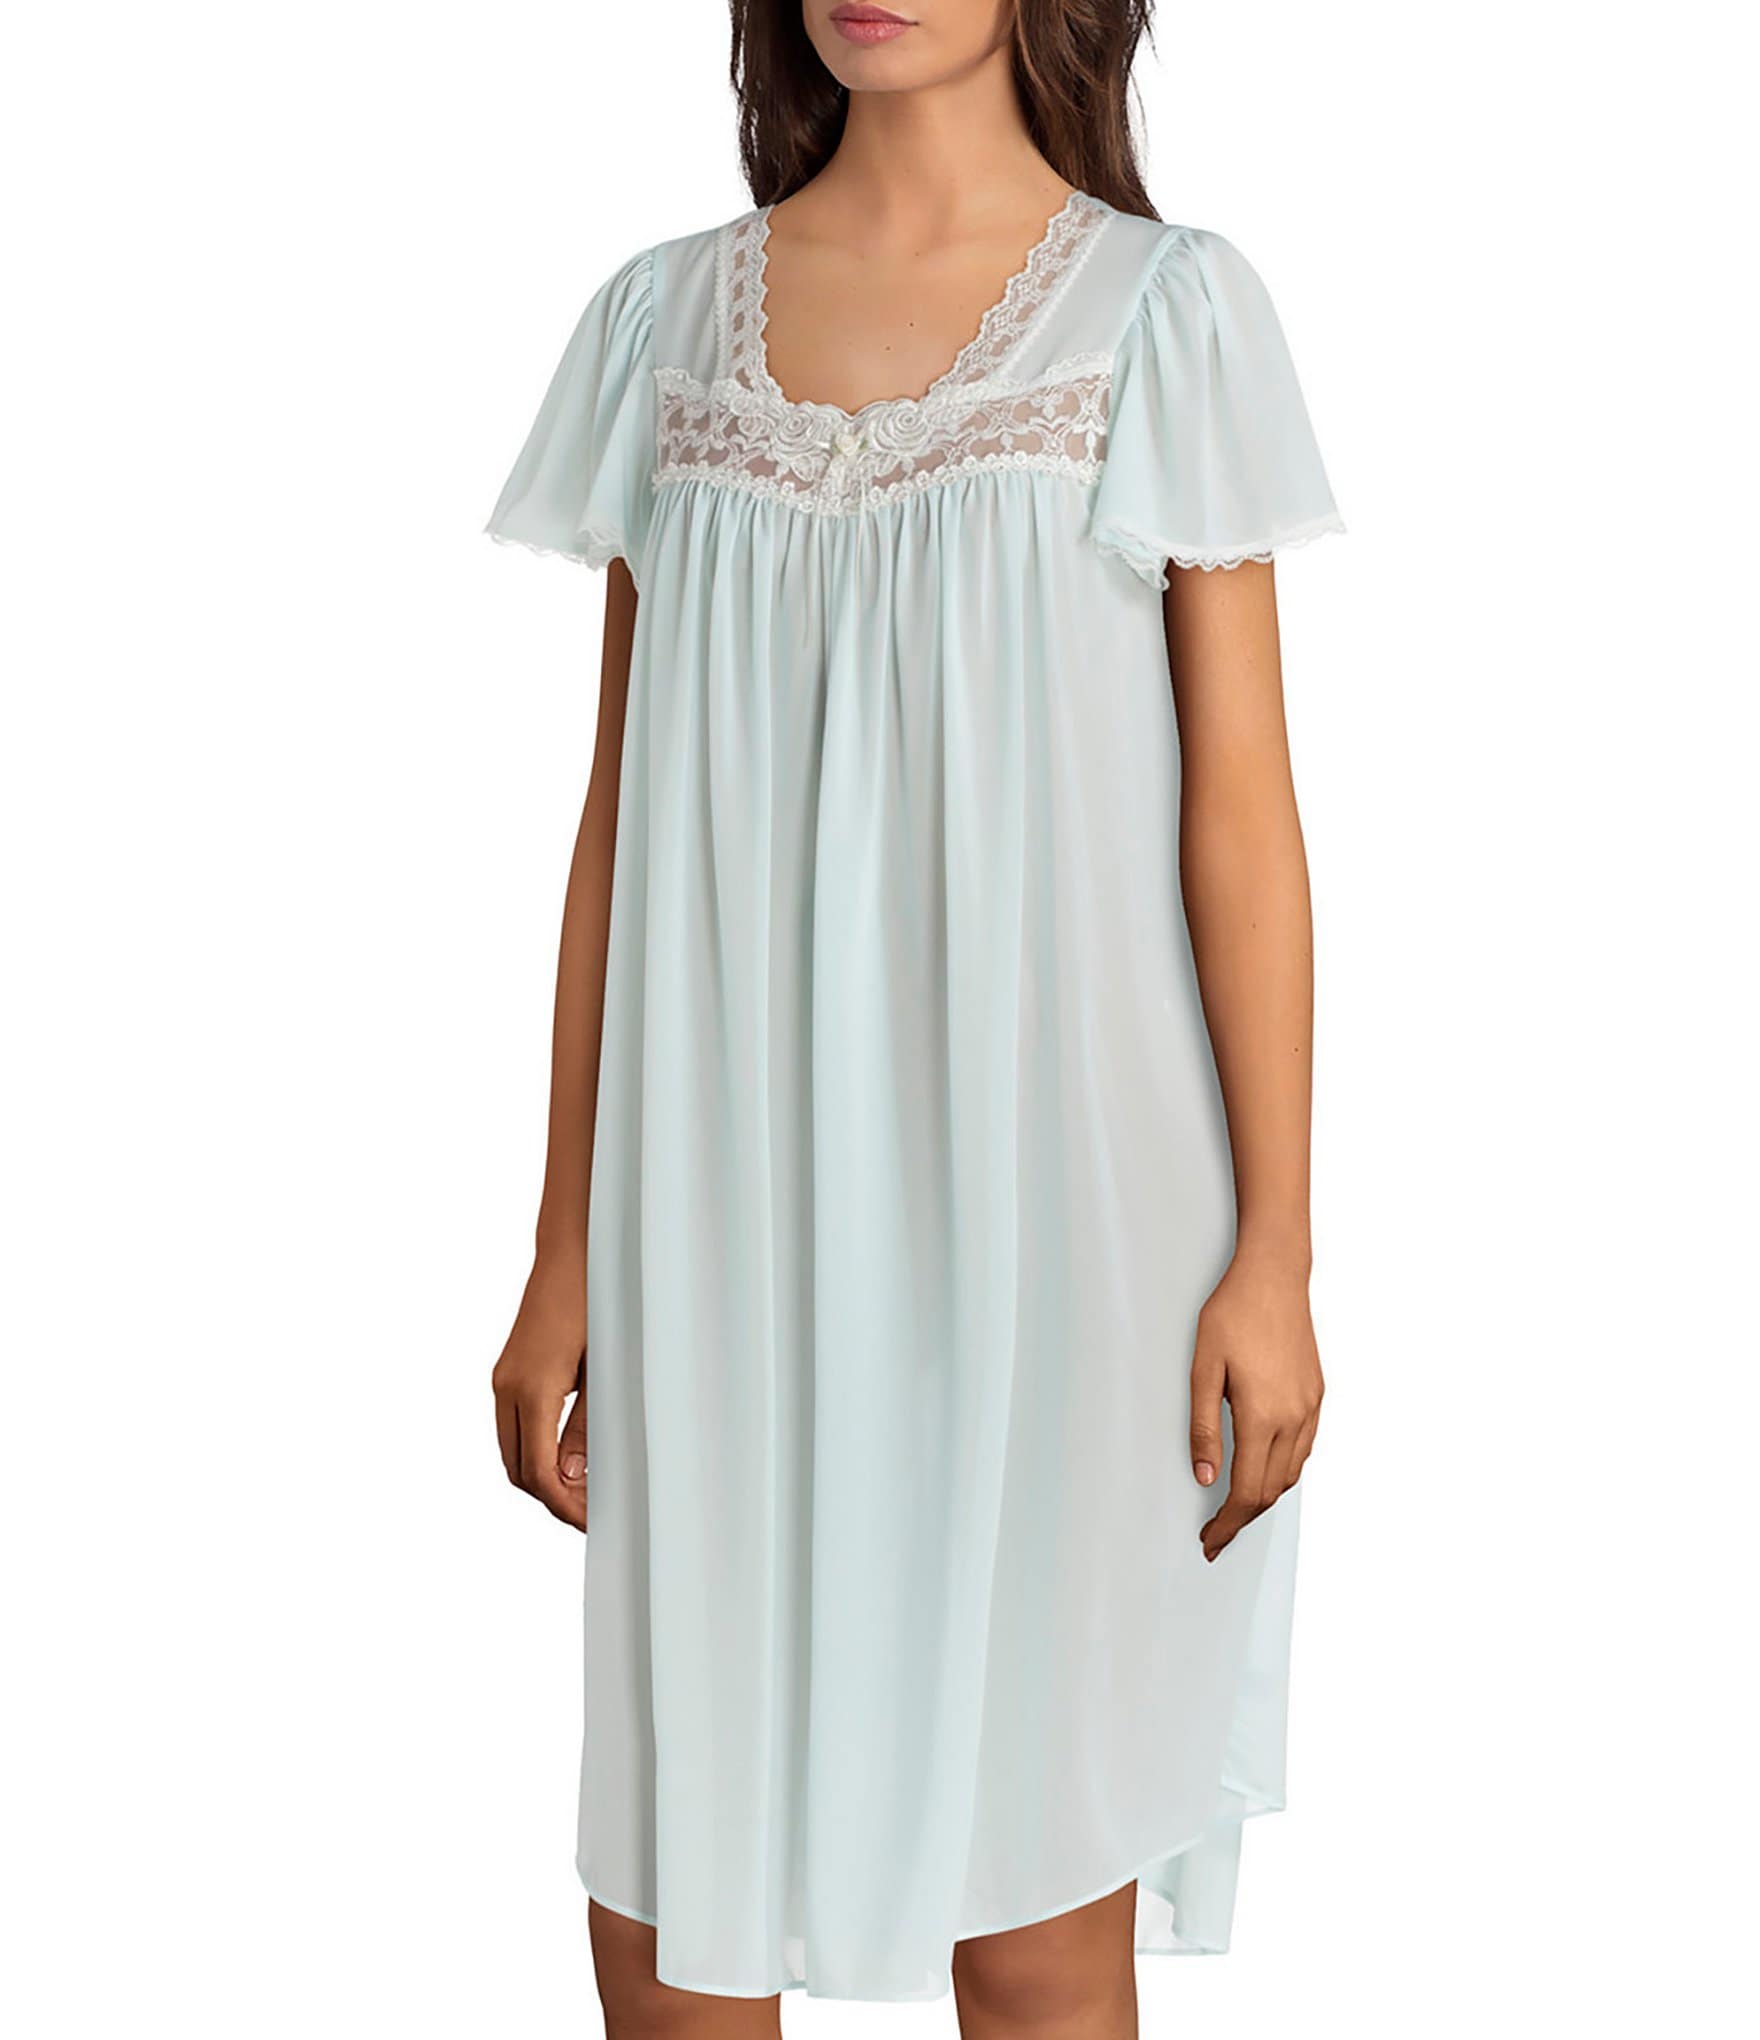 Silk Nightgowns For Eileen West Nightgown Plus Size Women - Silk Pajamas,  Cotton Sleepwear & Loungewear at